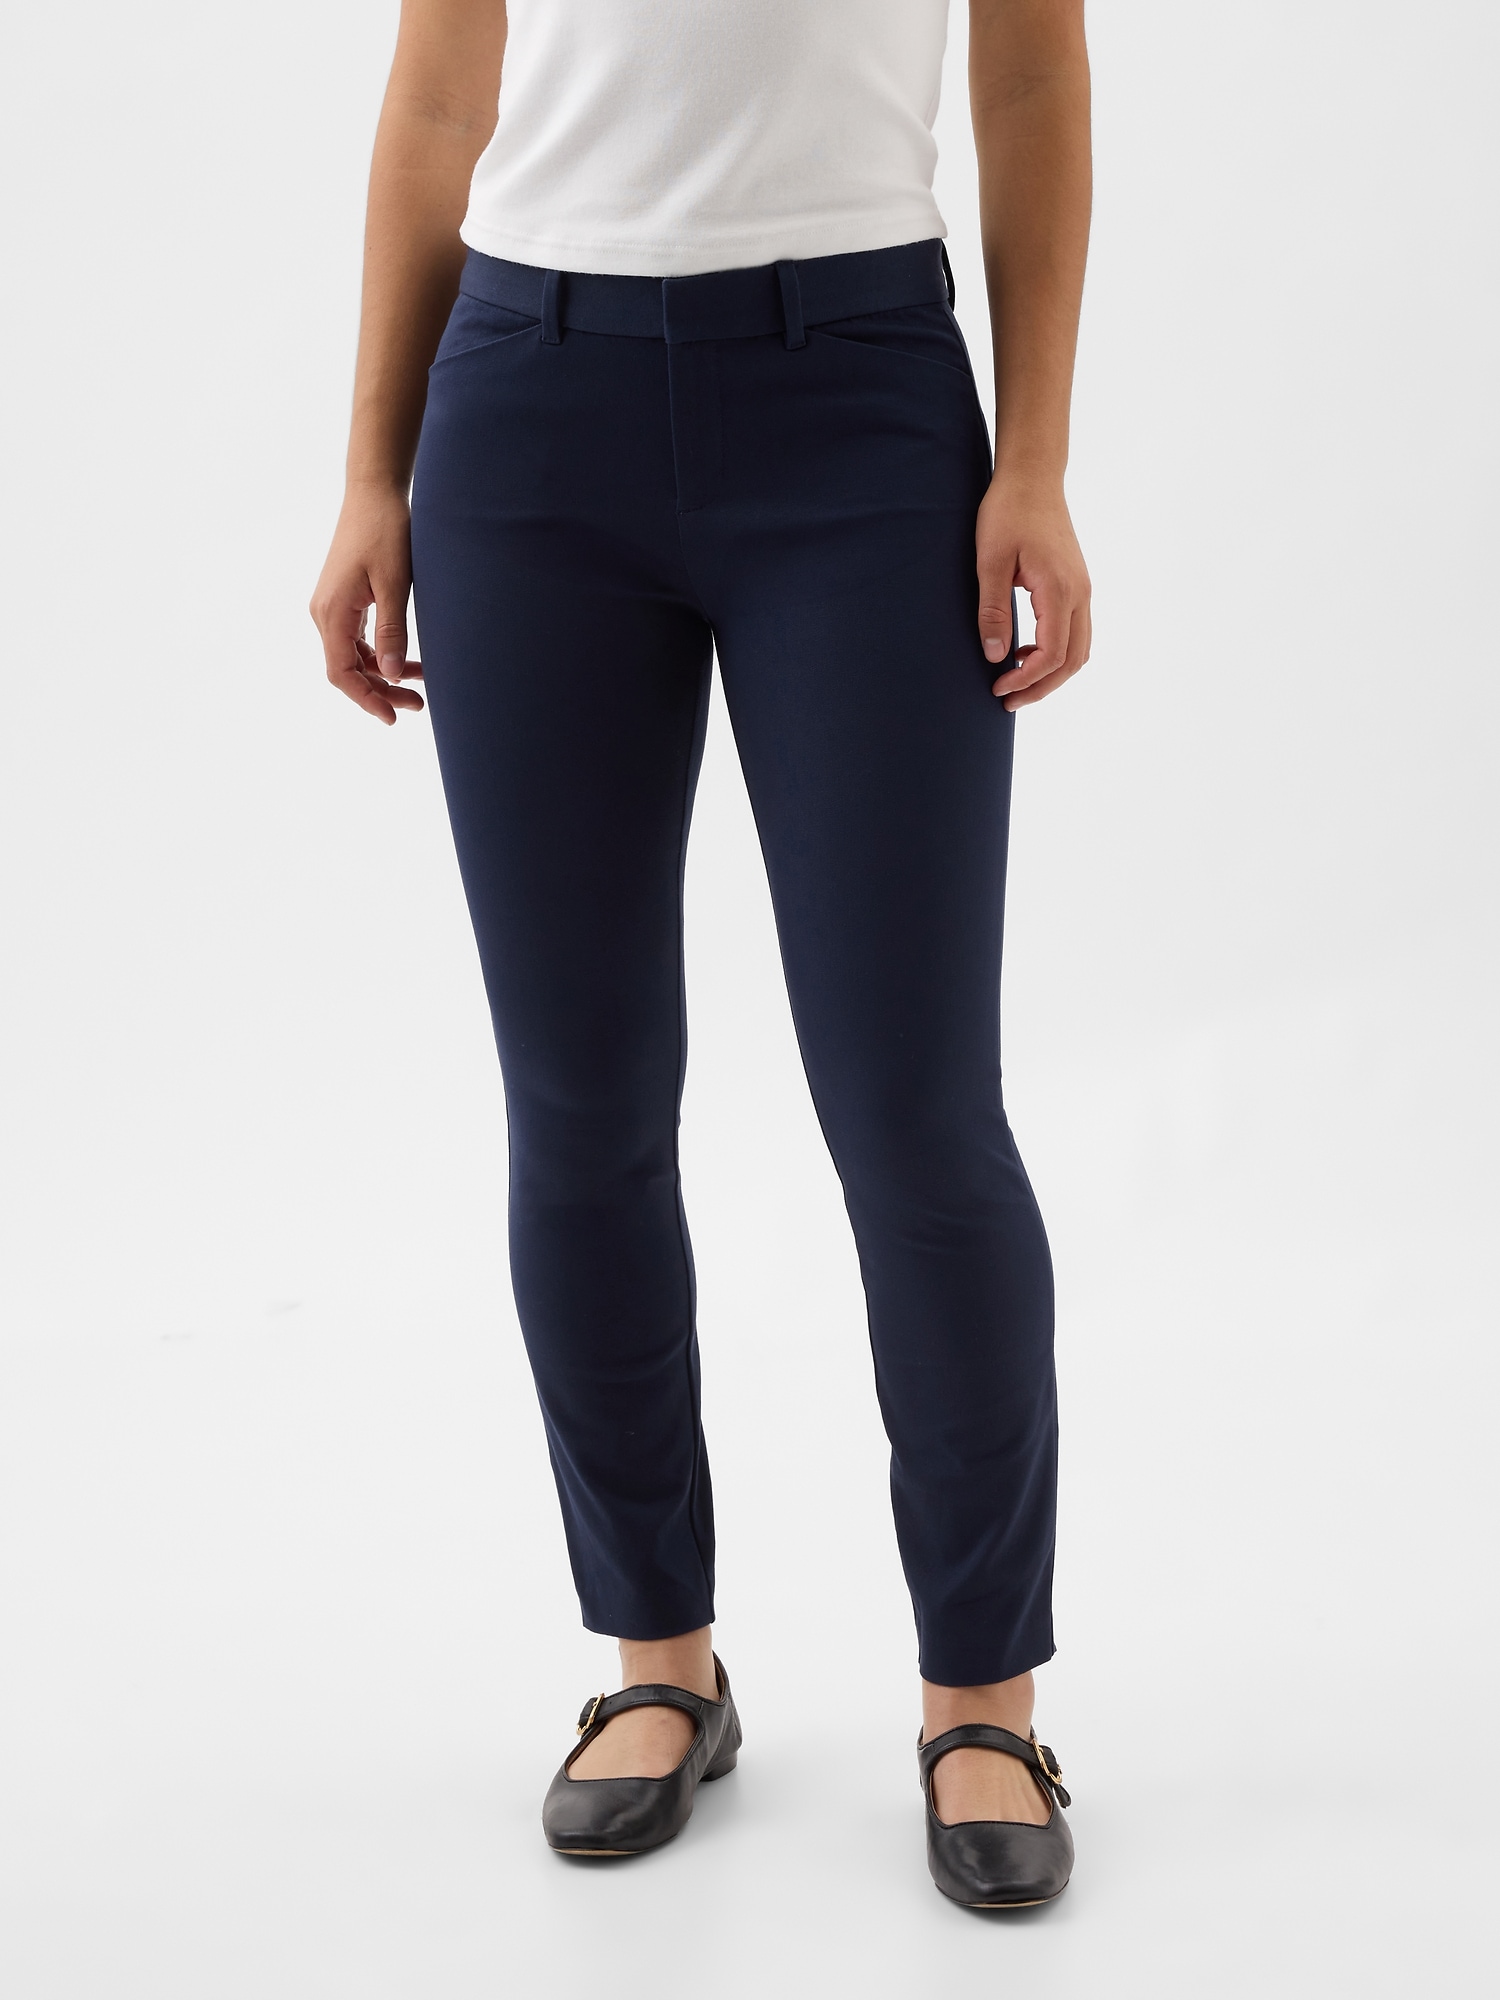 Lululemon Womens Navy Blue Work/Dress Pants Stretchy Slacks Size 6